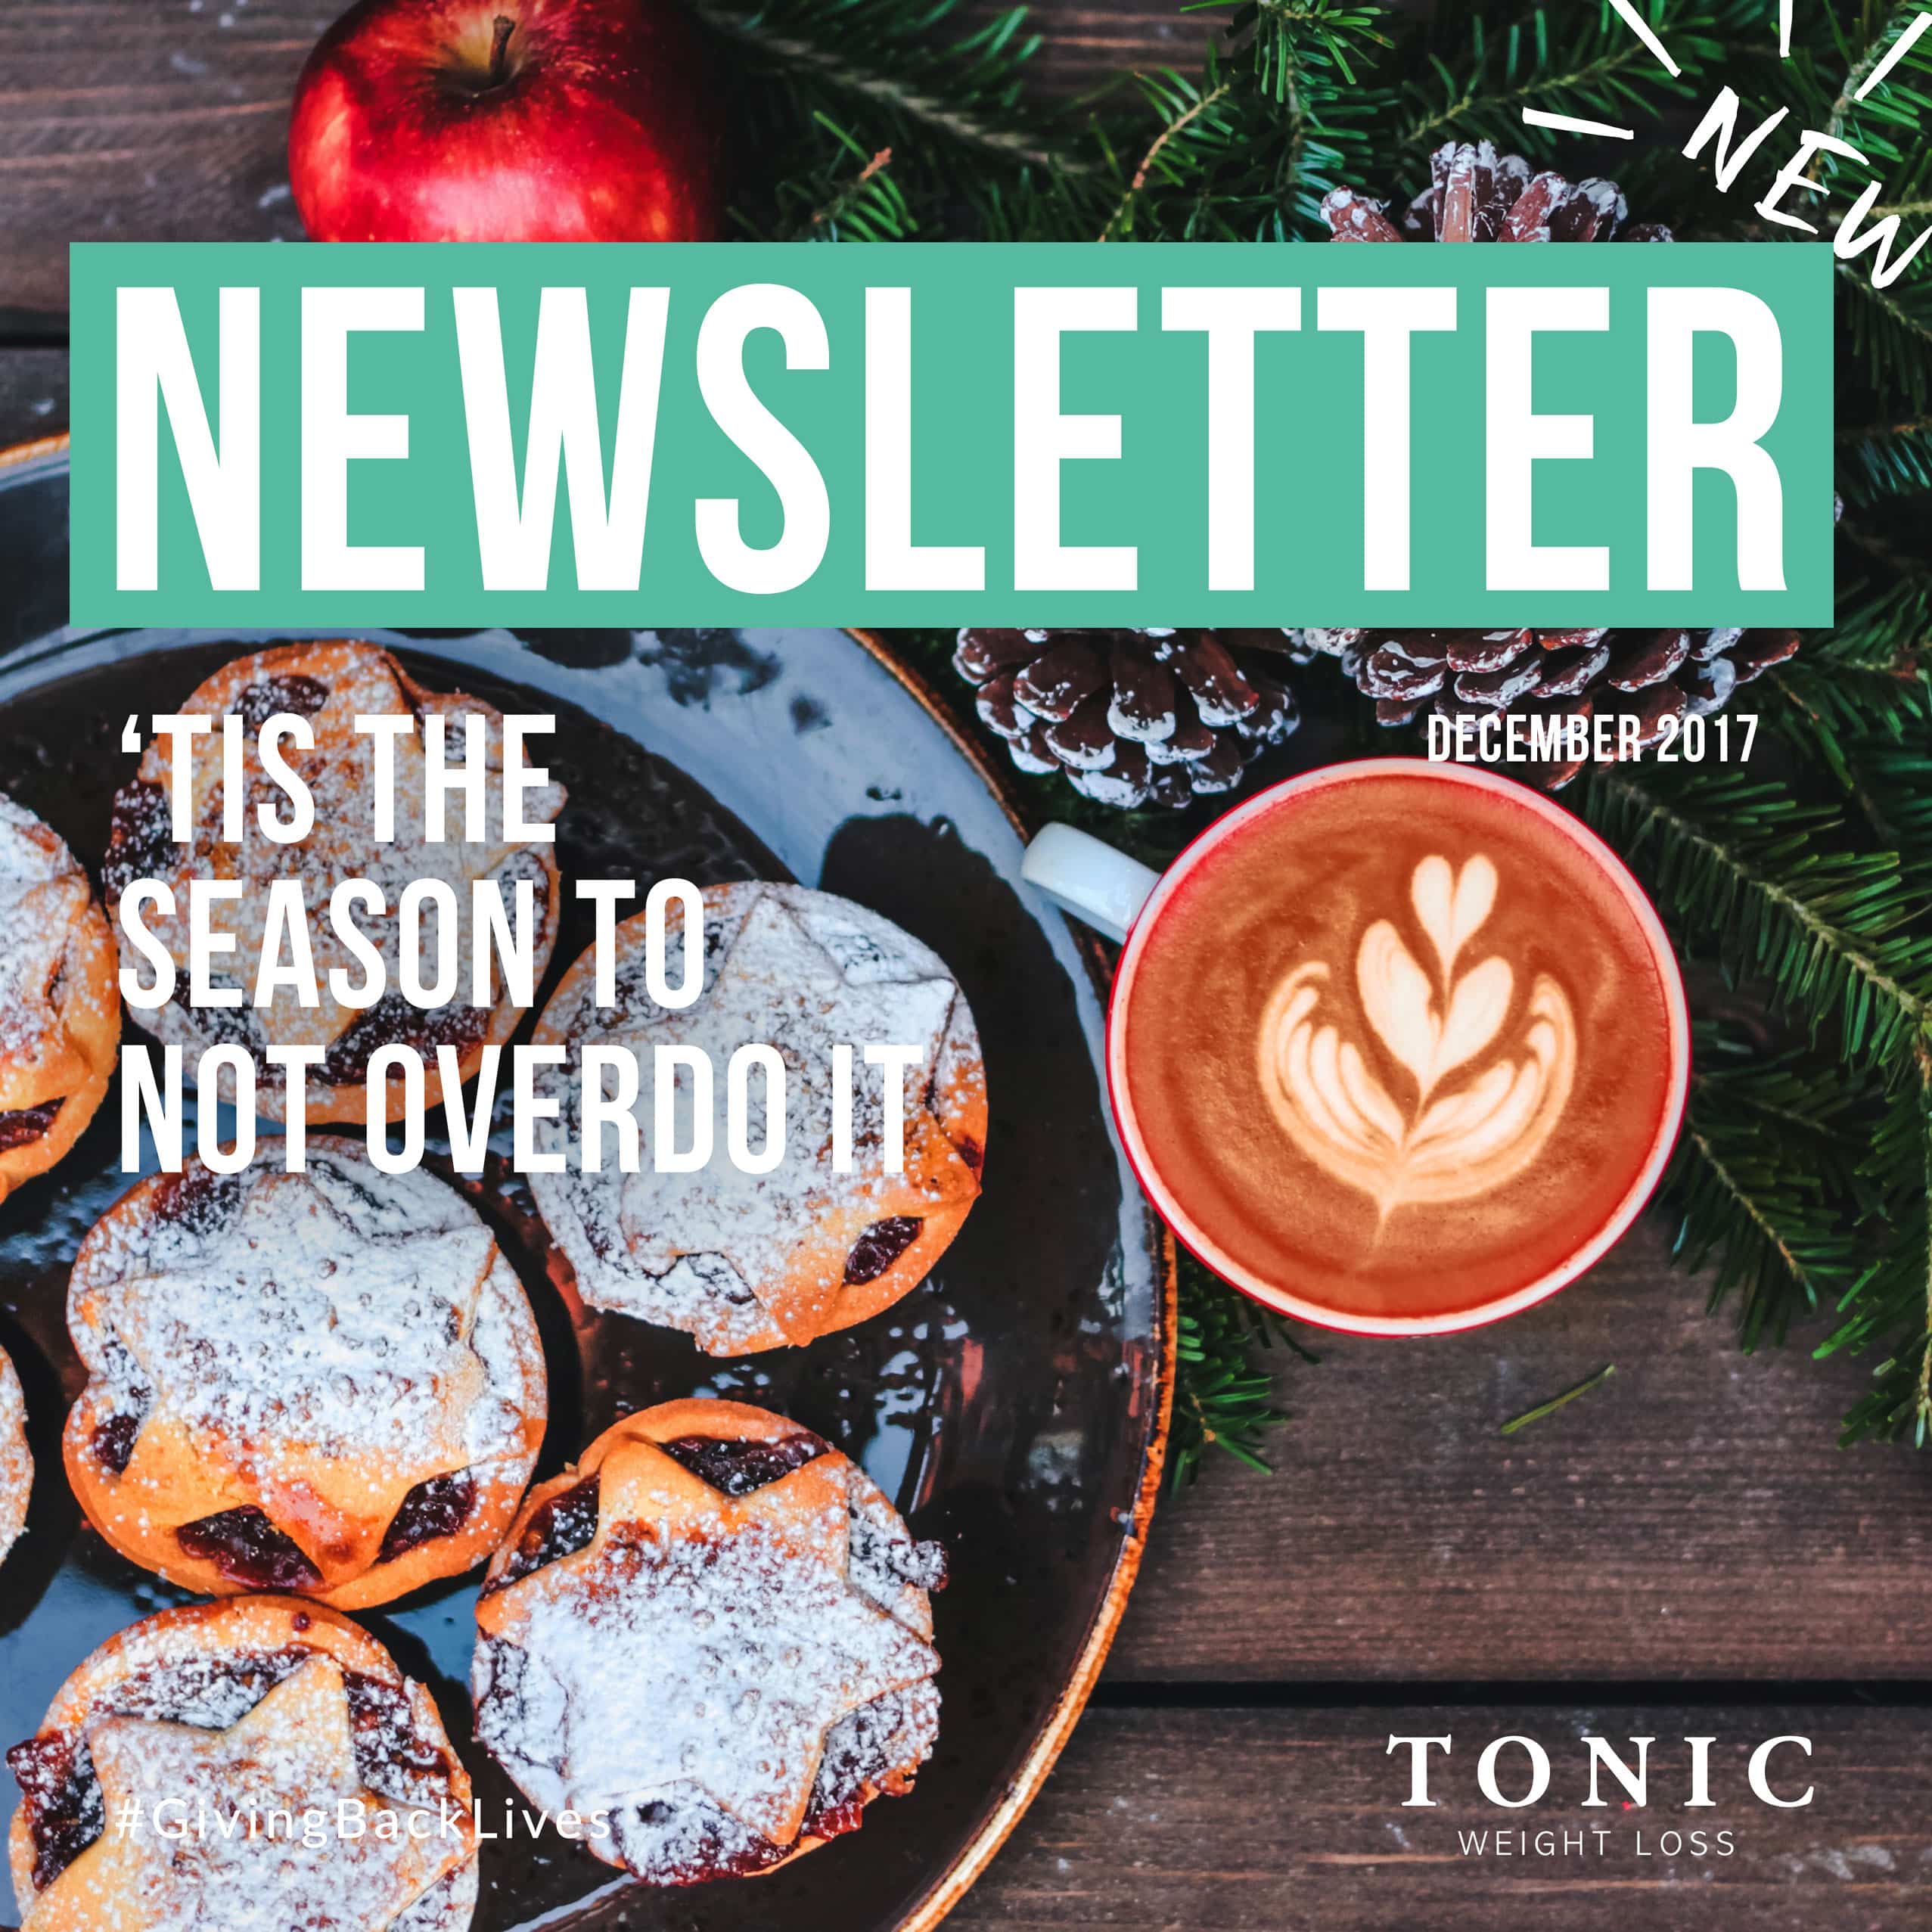 Tonic-Newletter-tis-the-season-to-not-overdo-it-4th-december-2017